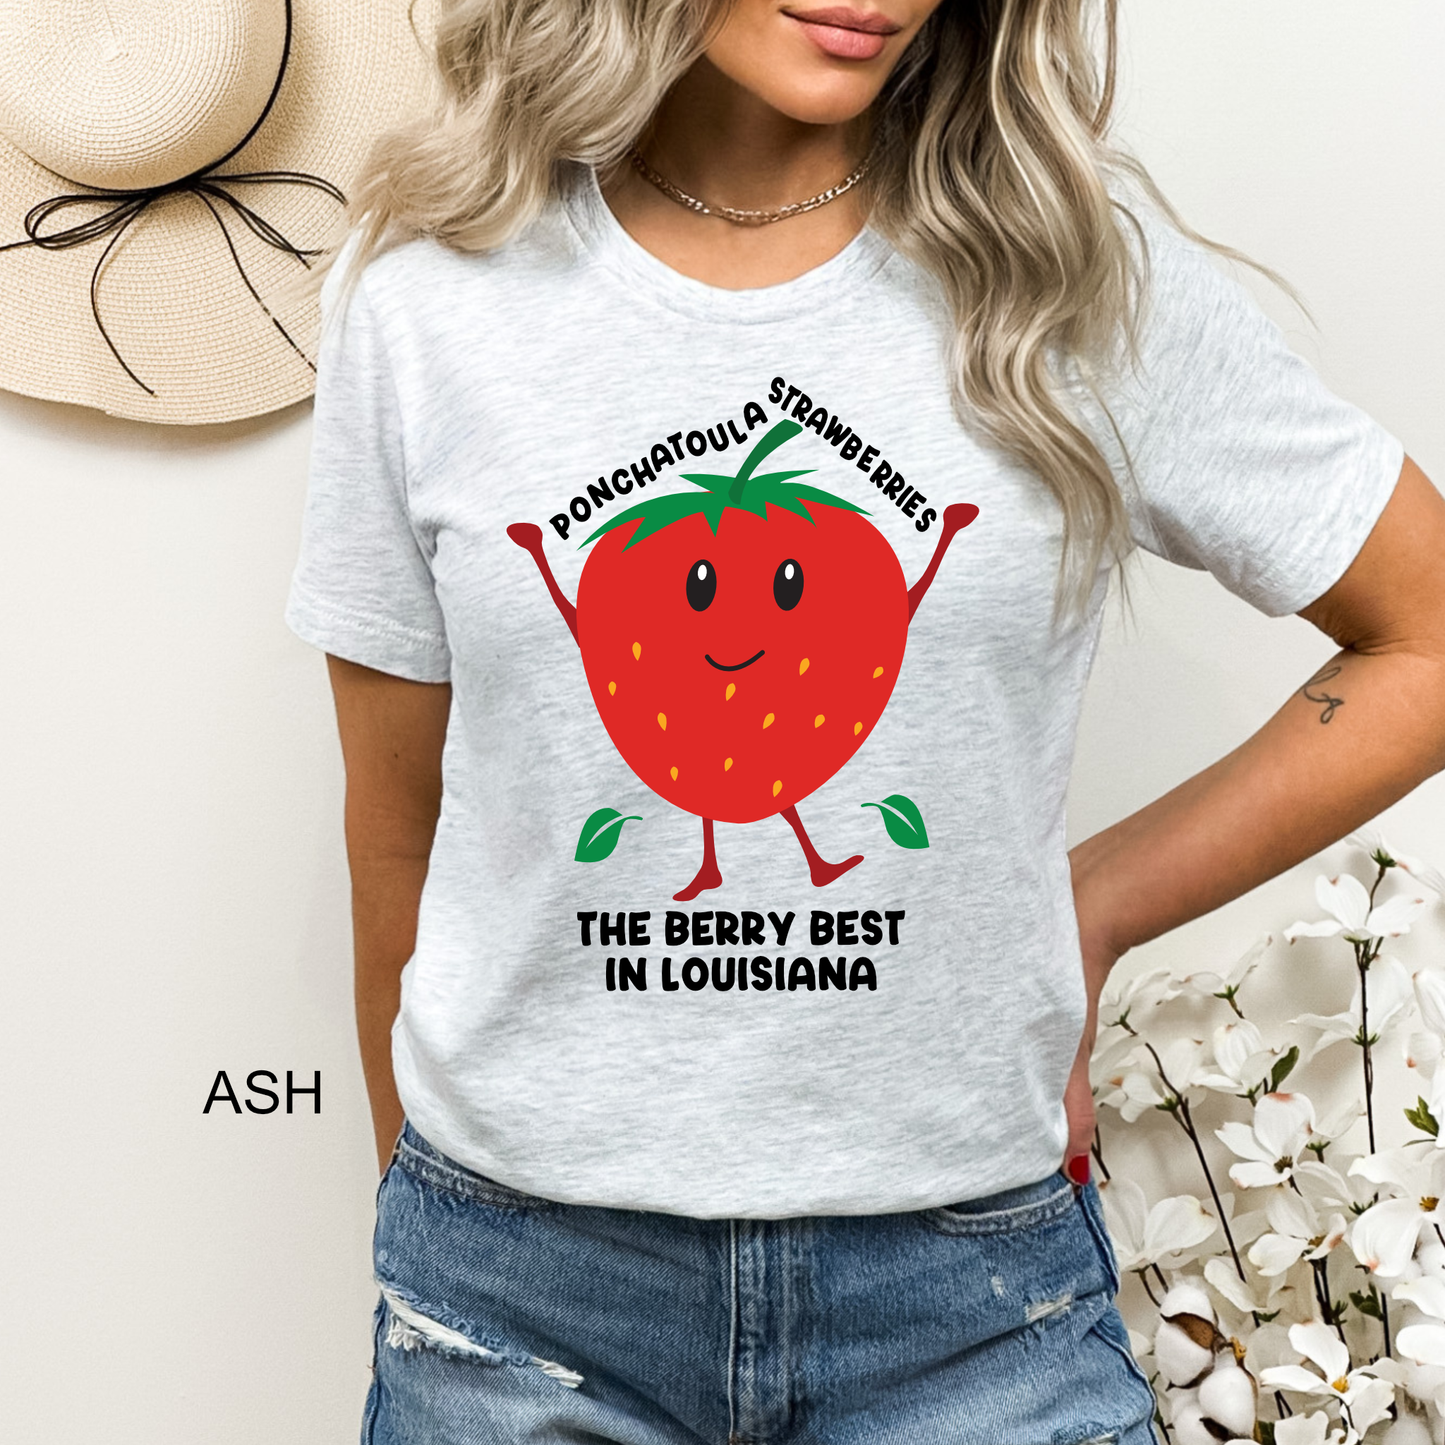 Berry Best Strawberries - Ponchatoula - Strawberry Festival T-shirt